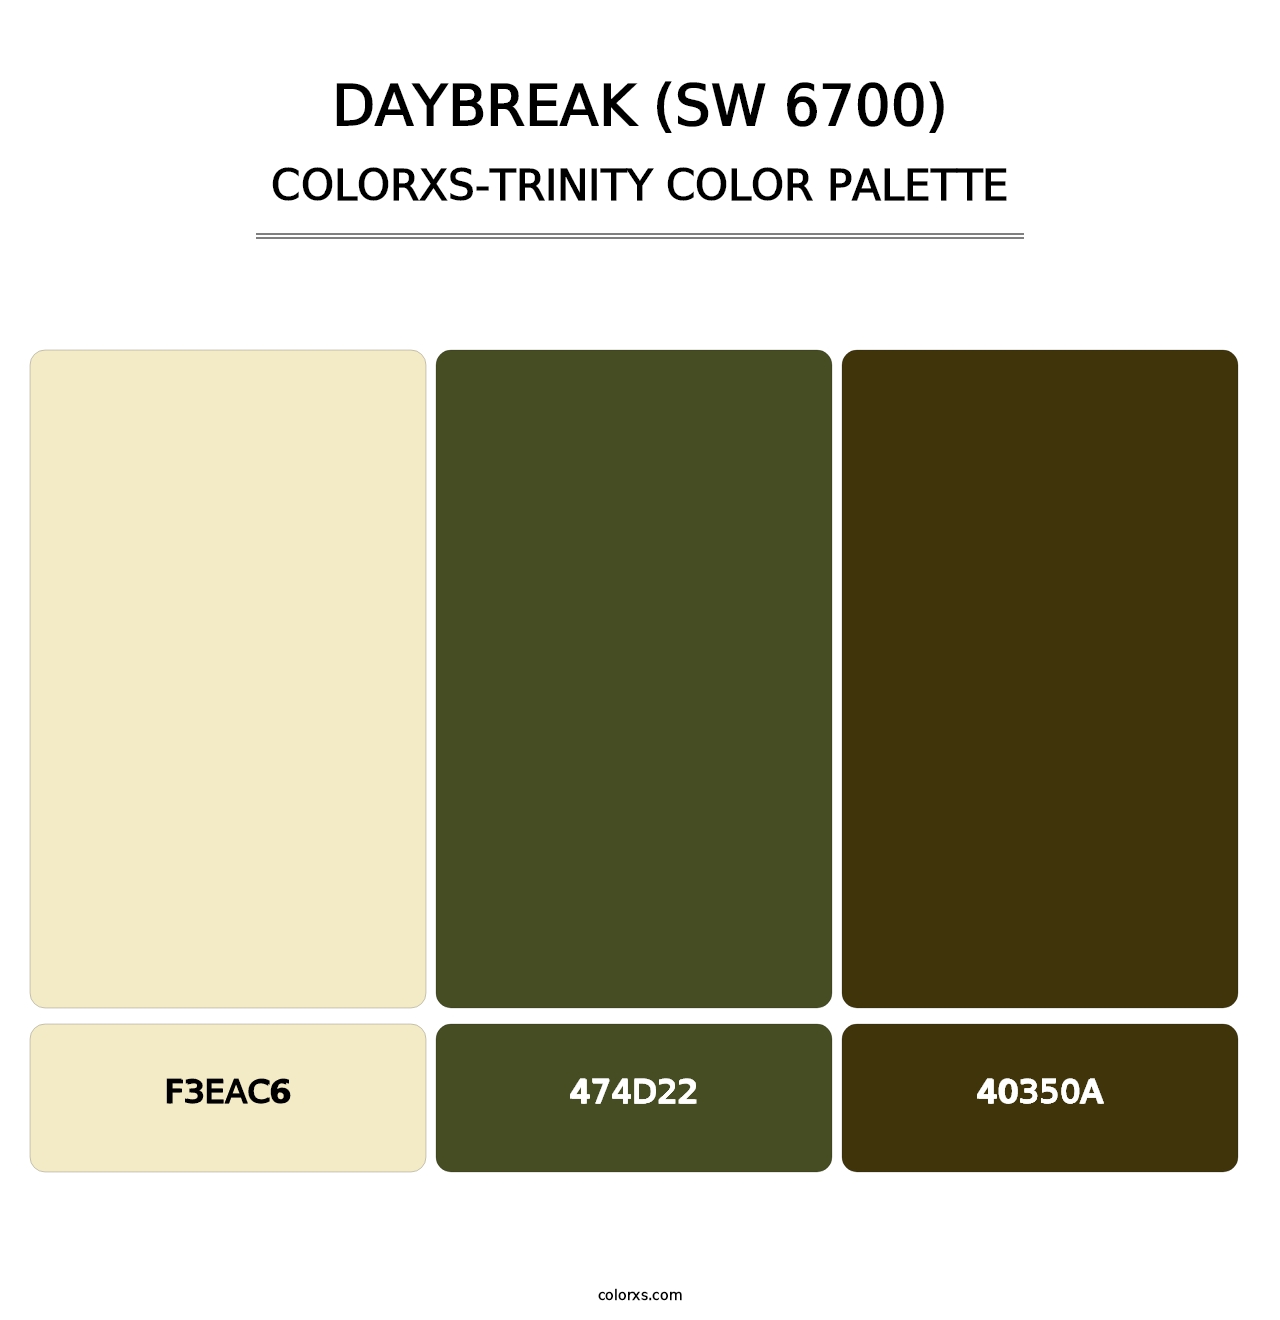 Daybreak (SW 6700) - Colorxs Trinity Palette